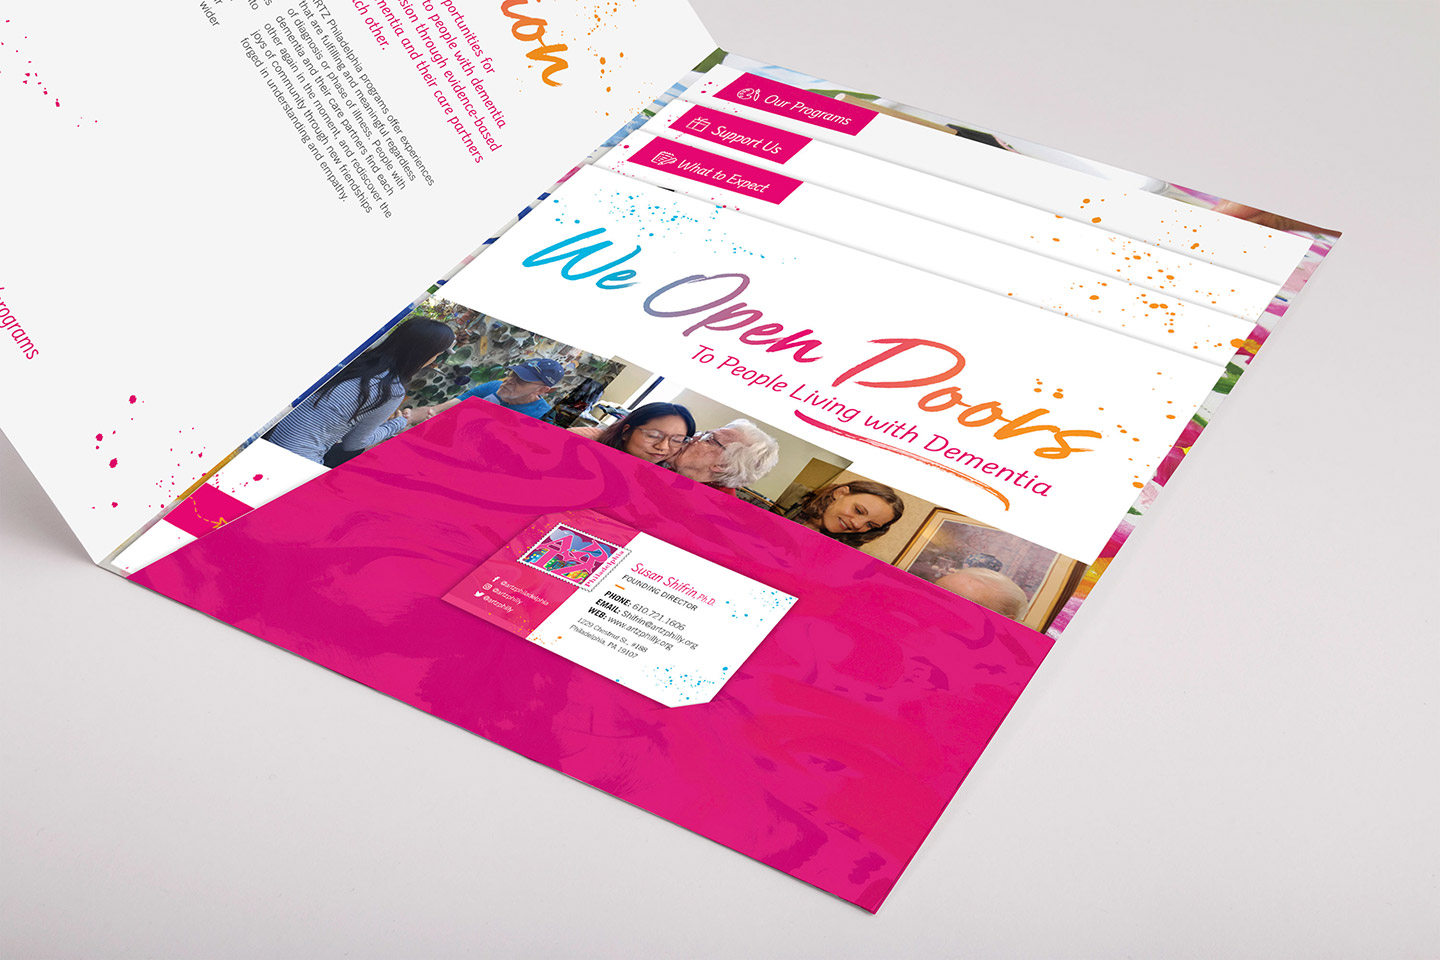 marketing material design for ARTZ philadelphia - pink pocket folder